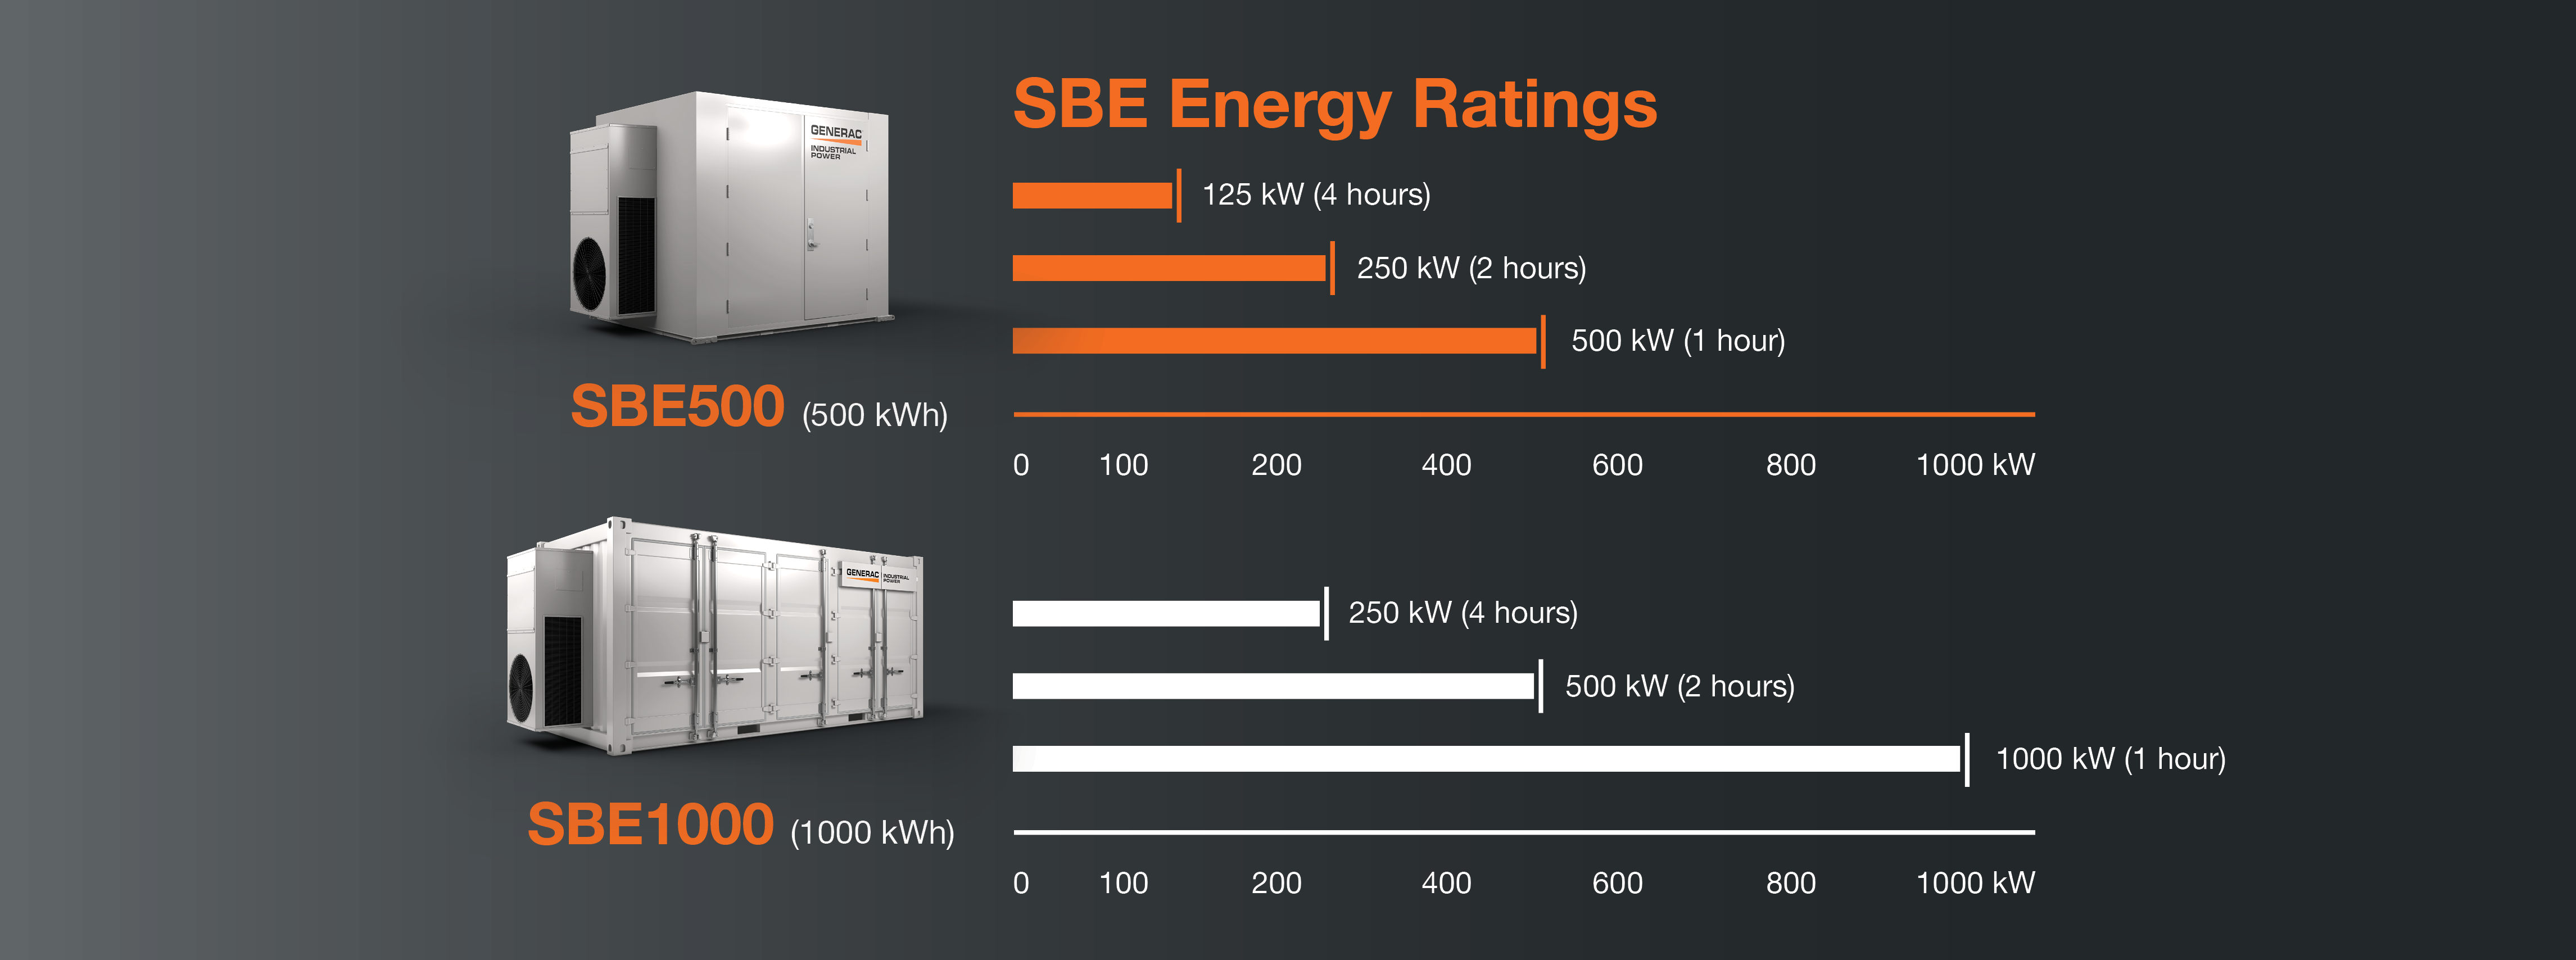 SBE500 SBE1000 Energy ratings